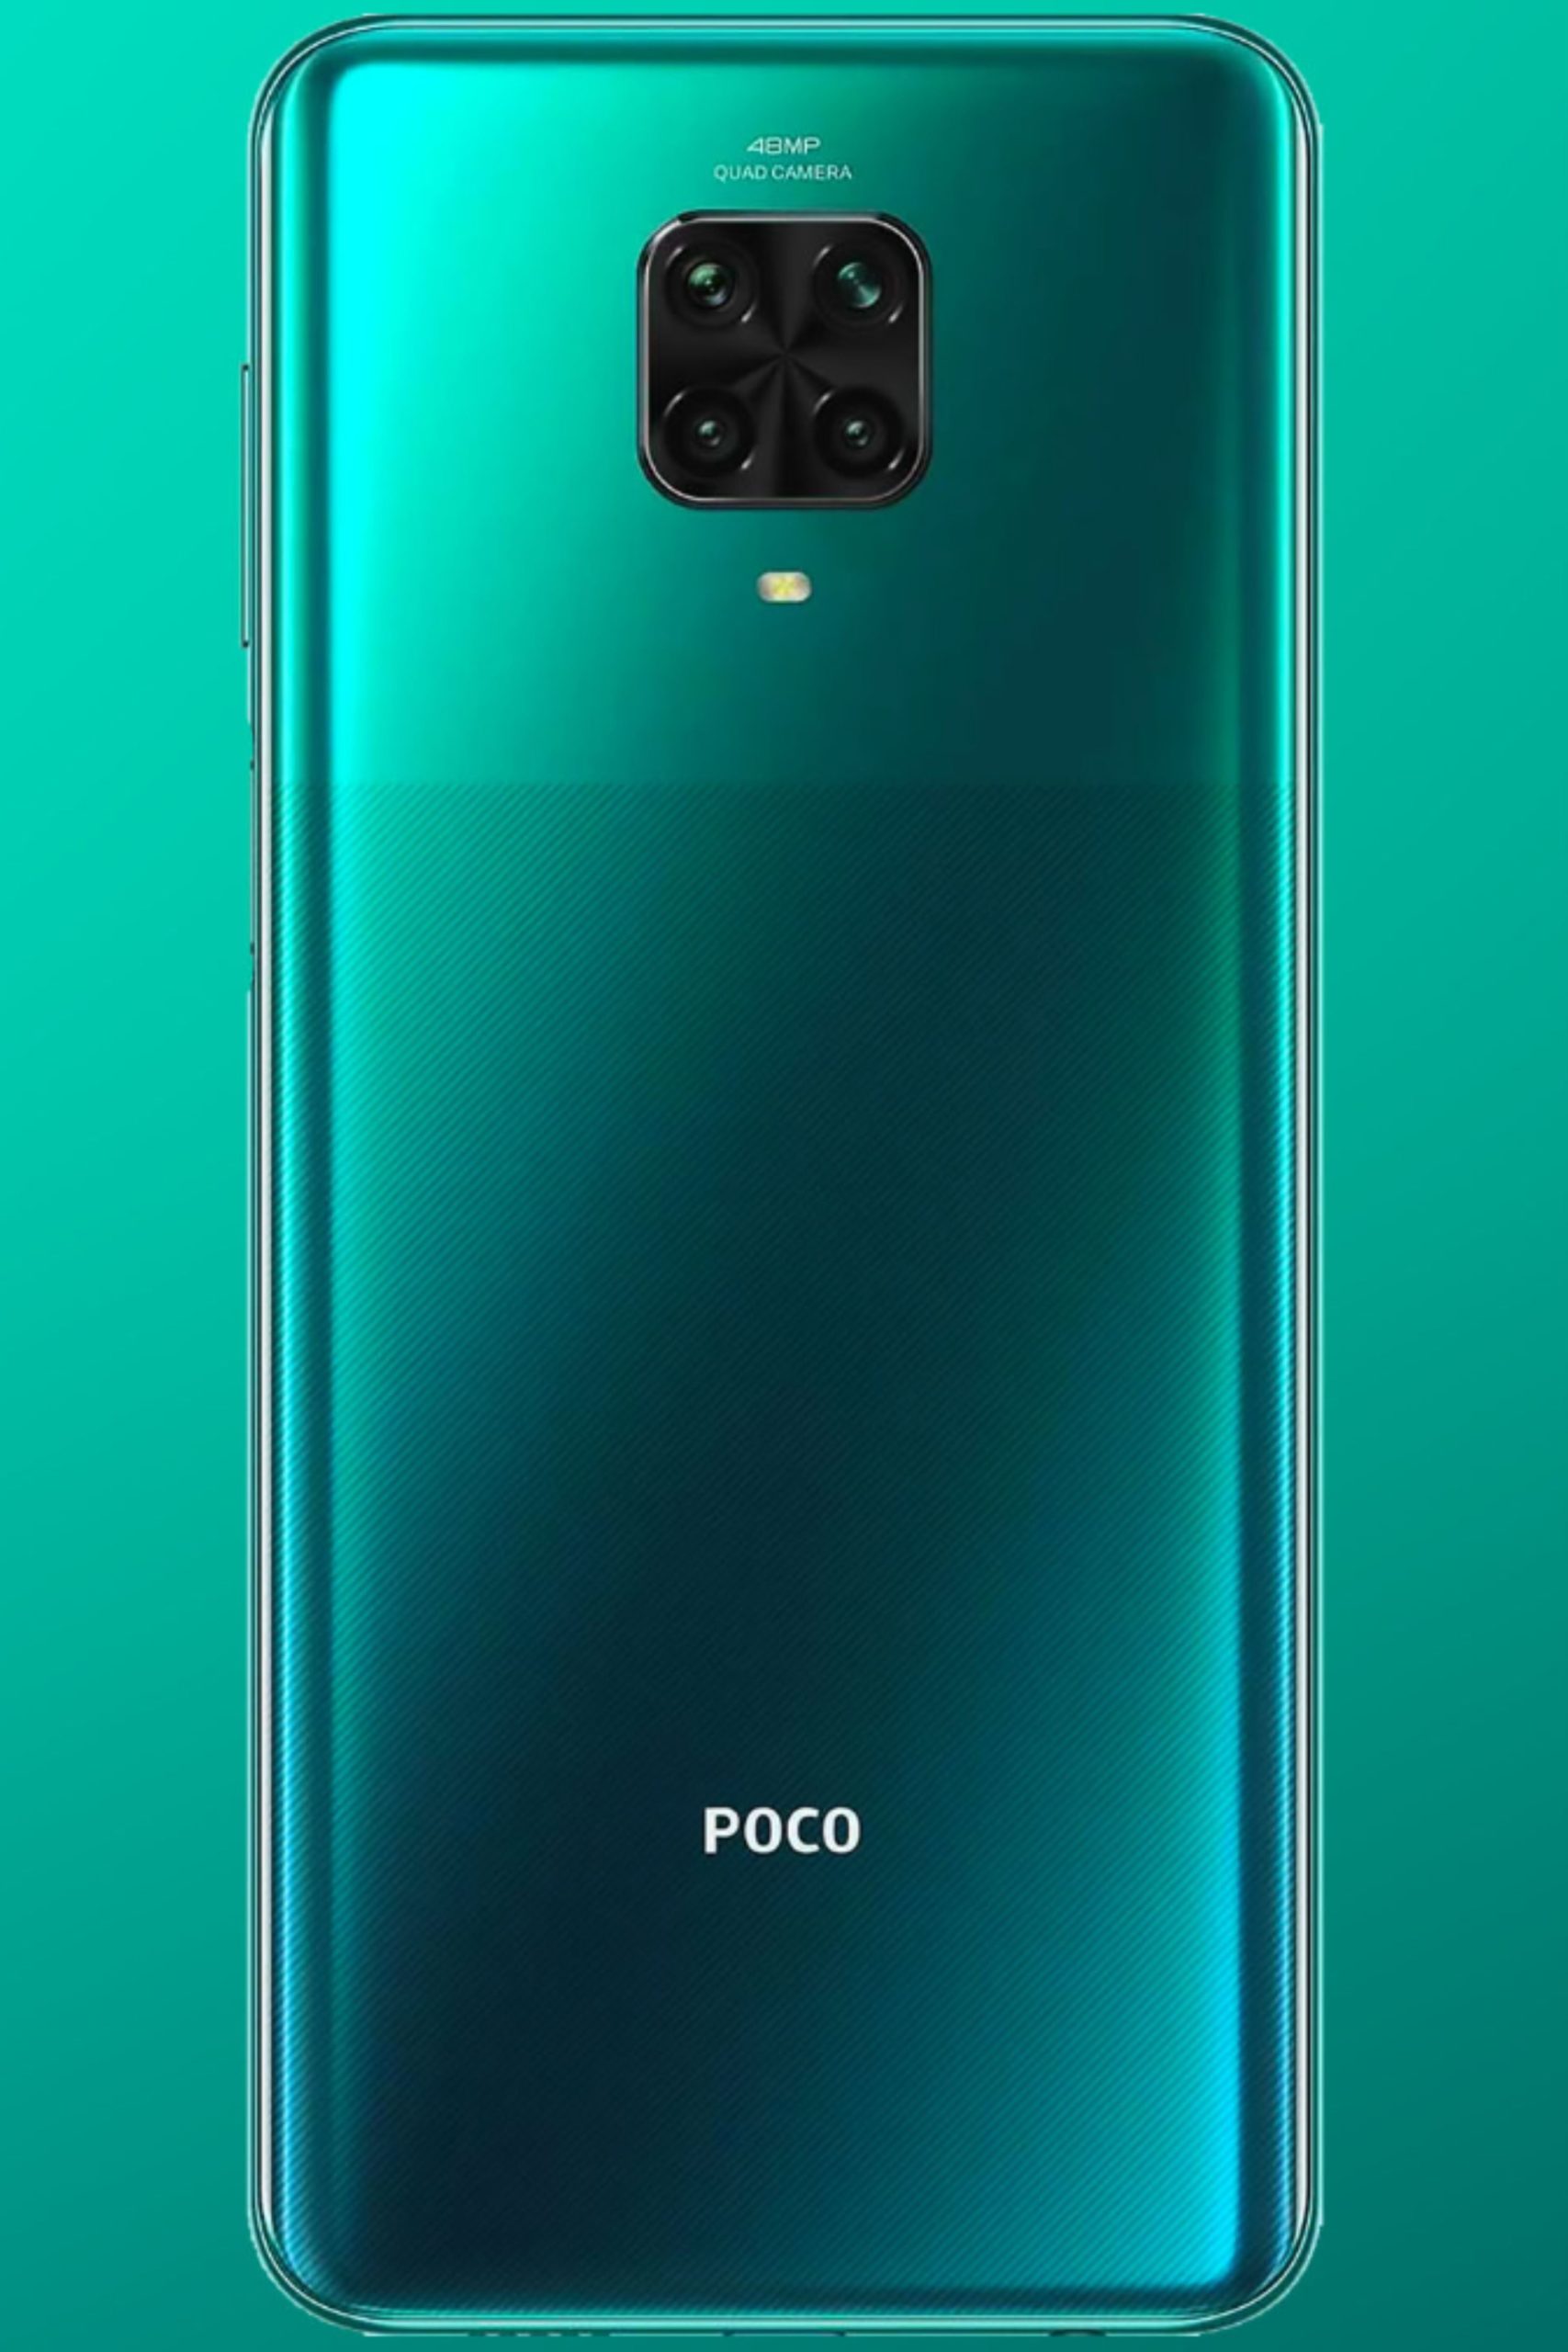 Poco M2 Pro 04 Mobilespecification8 Scaled